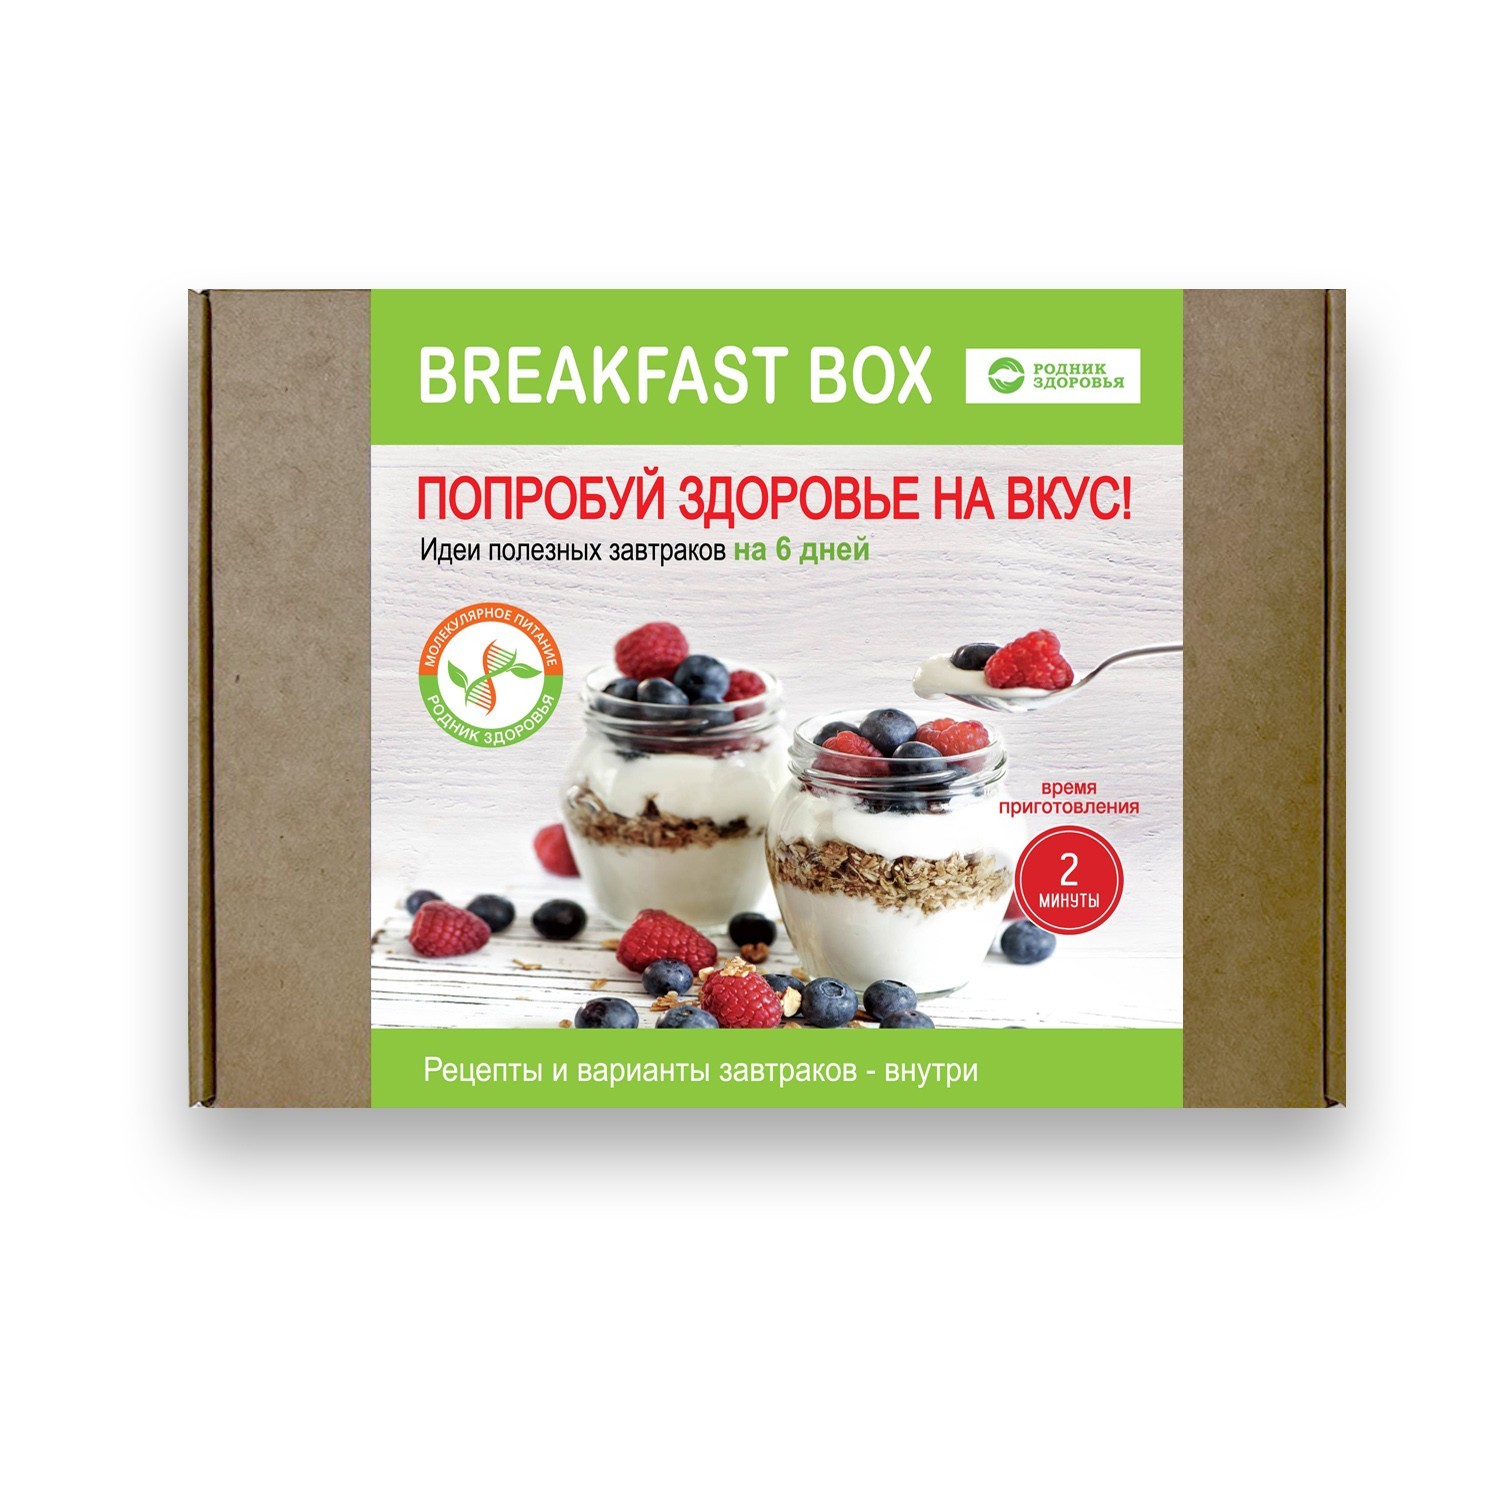 Breakfast box "Попробуй здоровье на вкус"